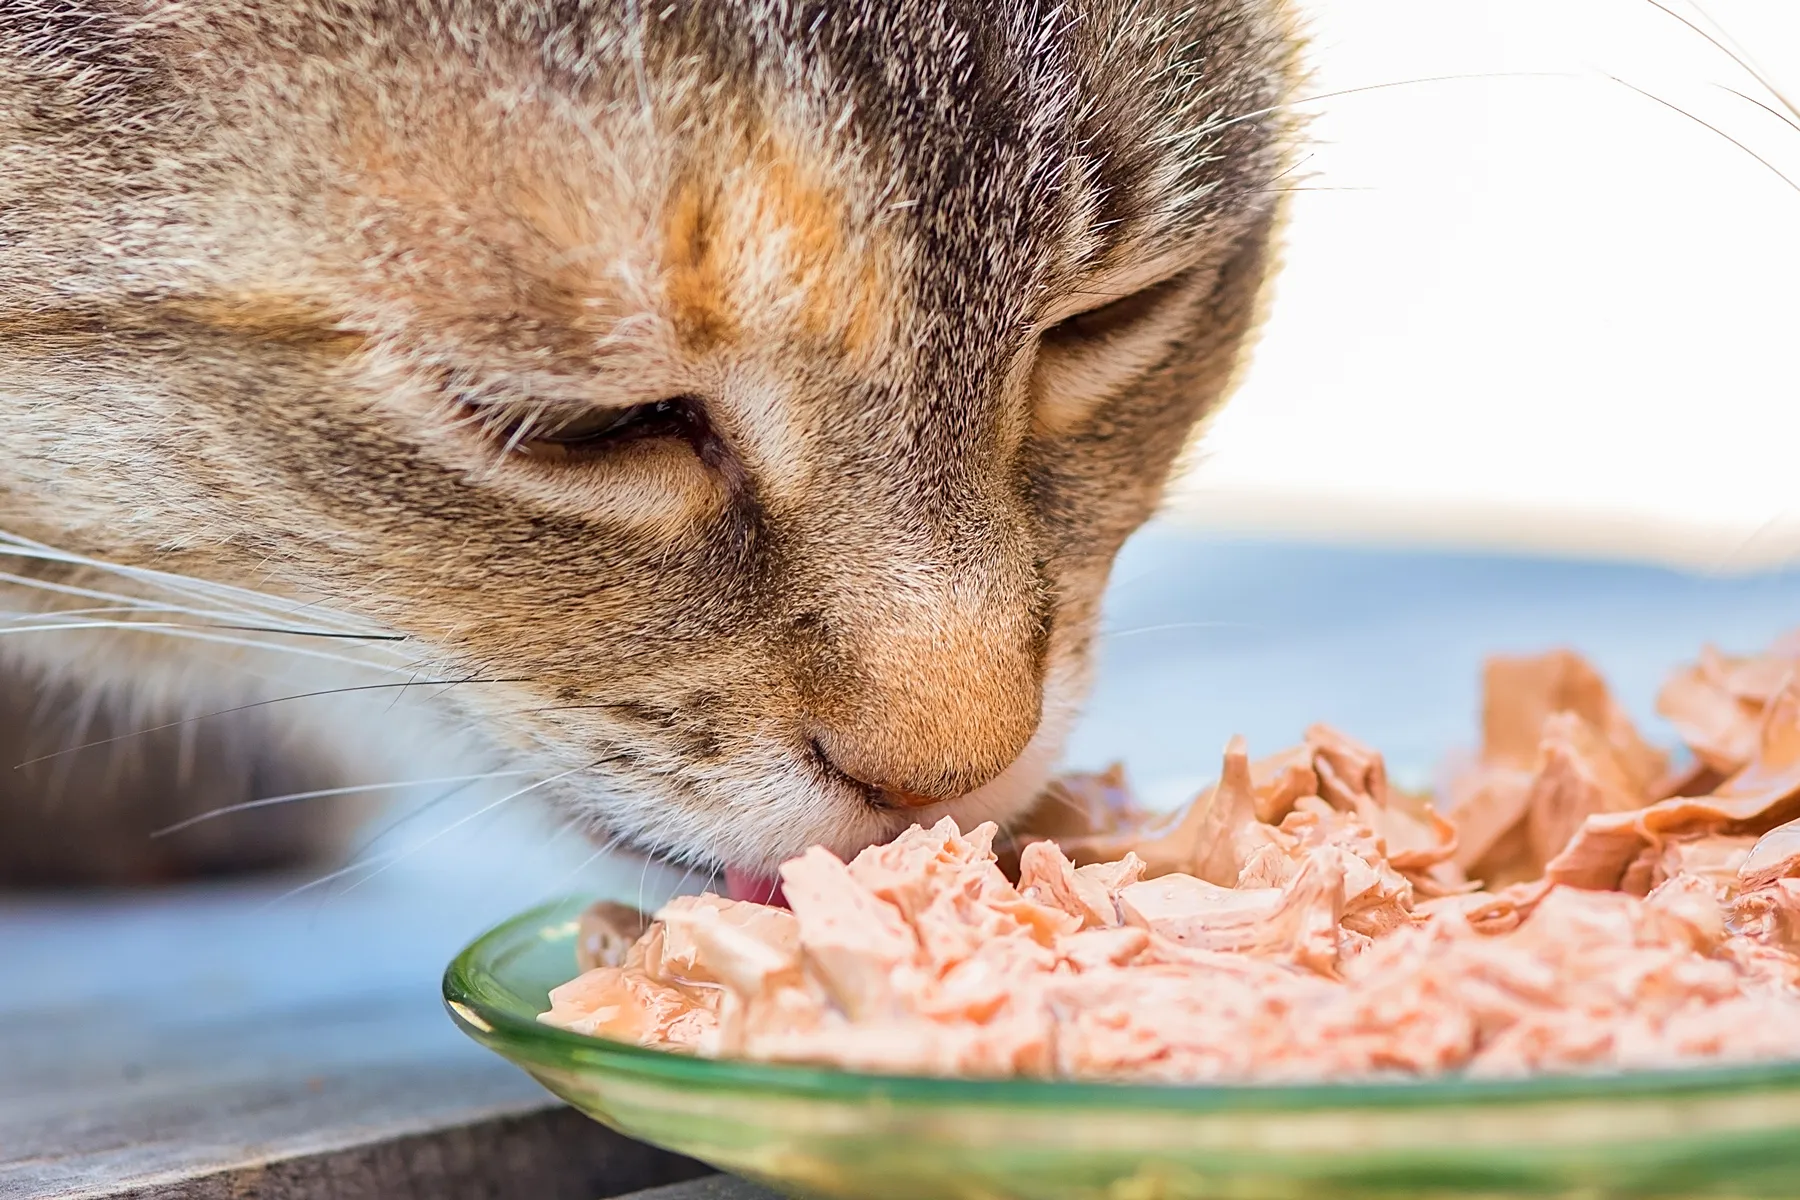 Low Carb Cat Food Chart